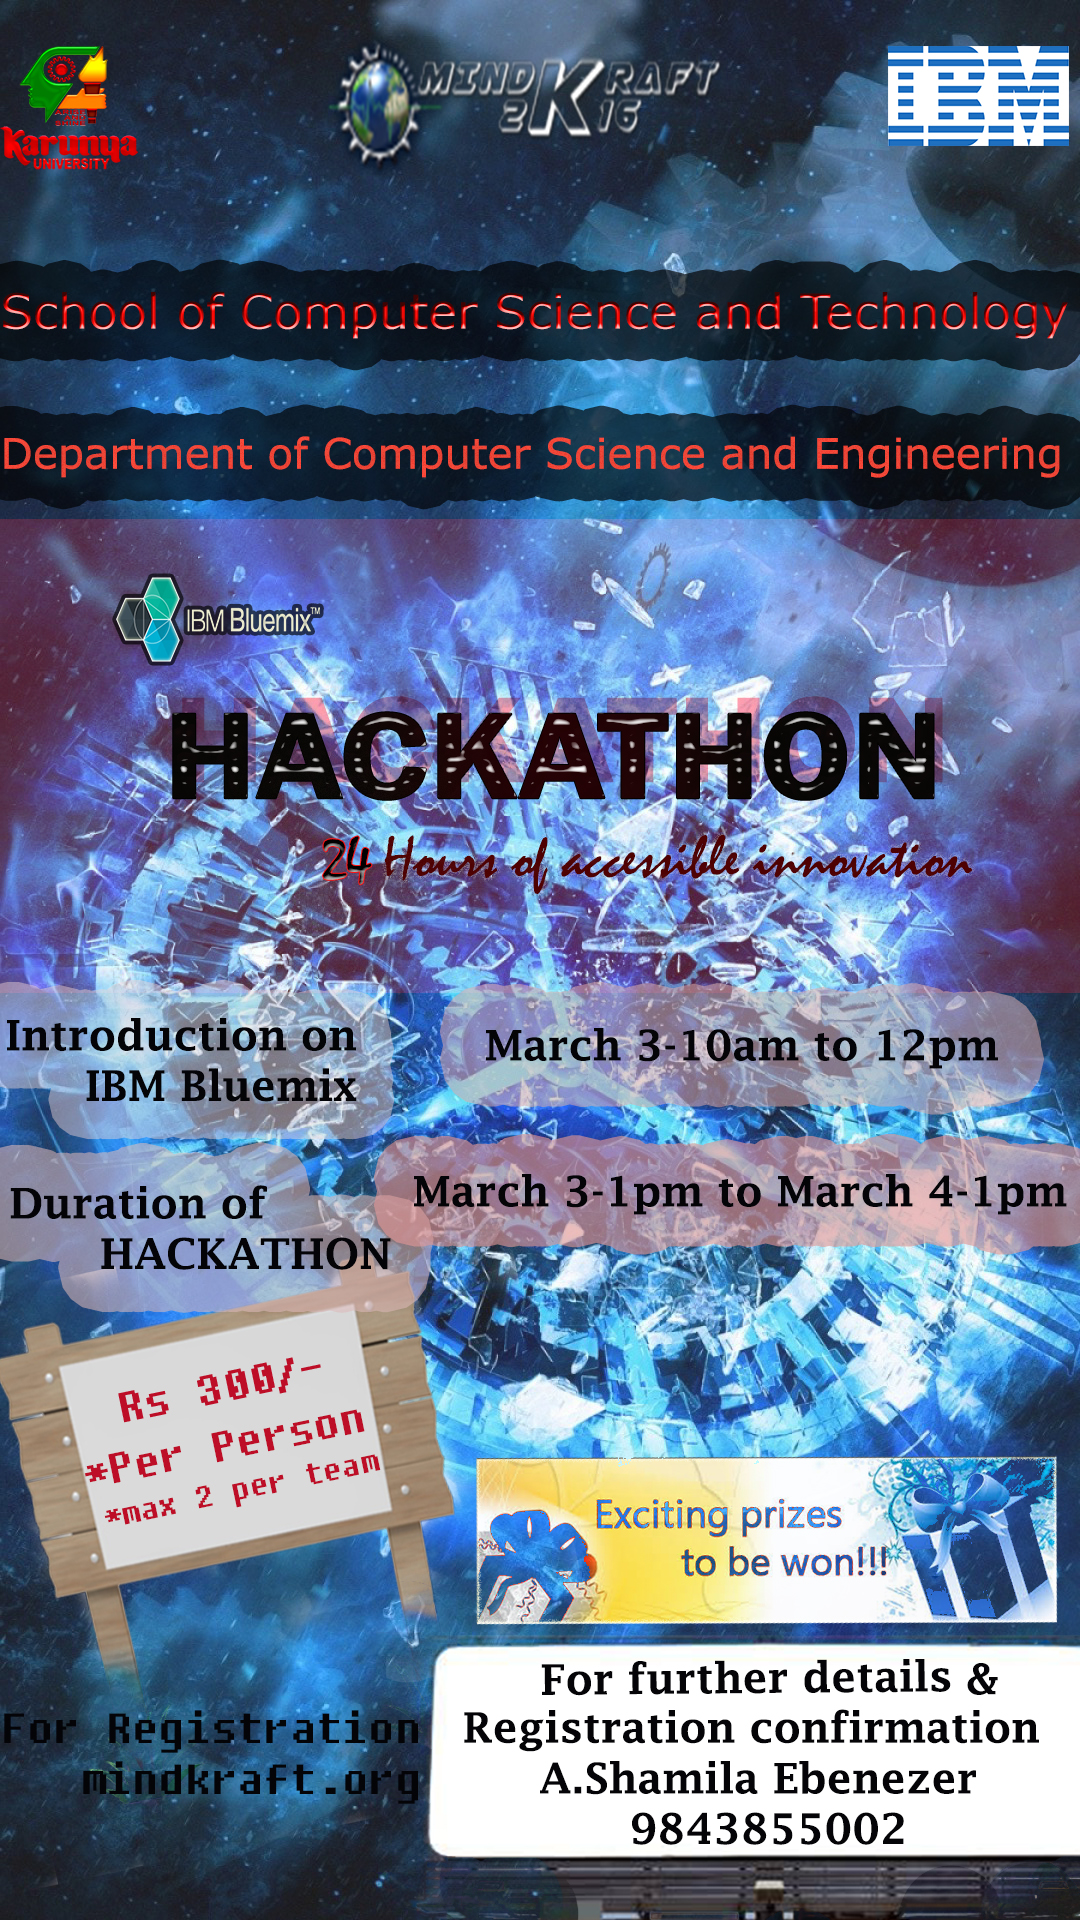 IBM Bluemix Hackathon 2016, Coimbatore, Tamil Nadu, India